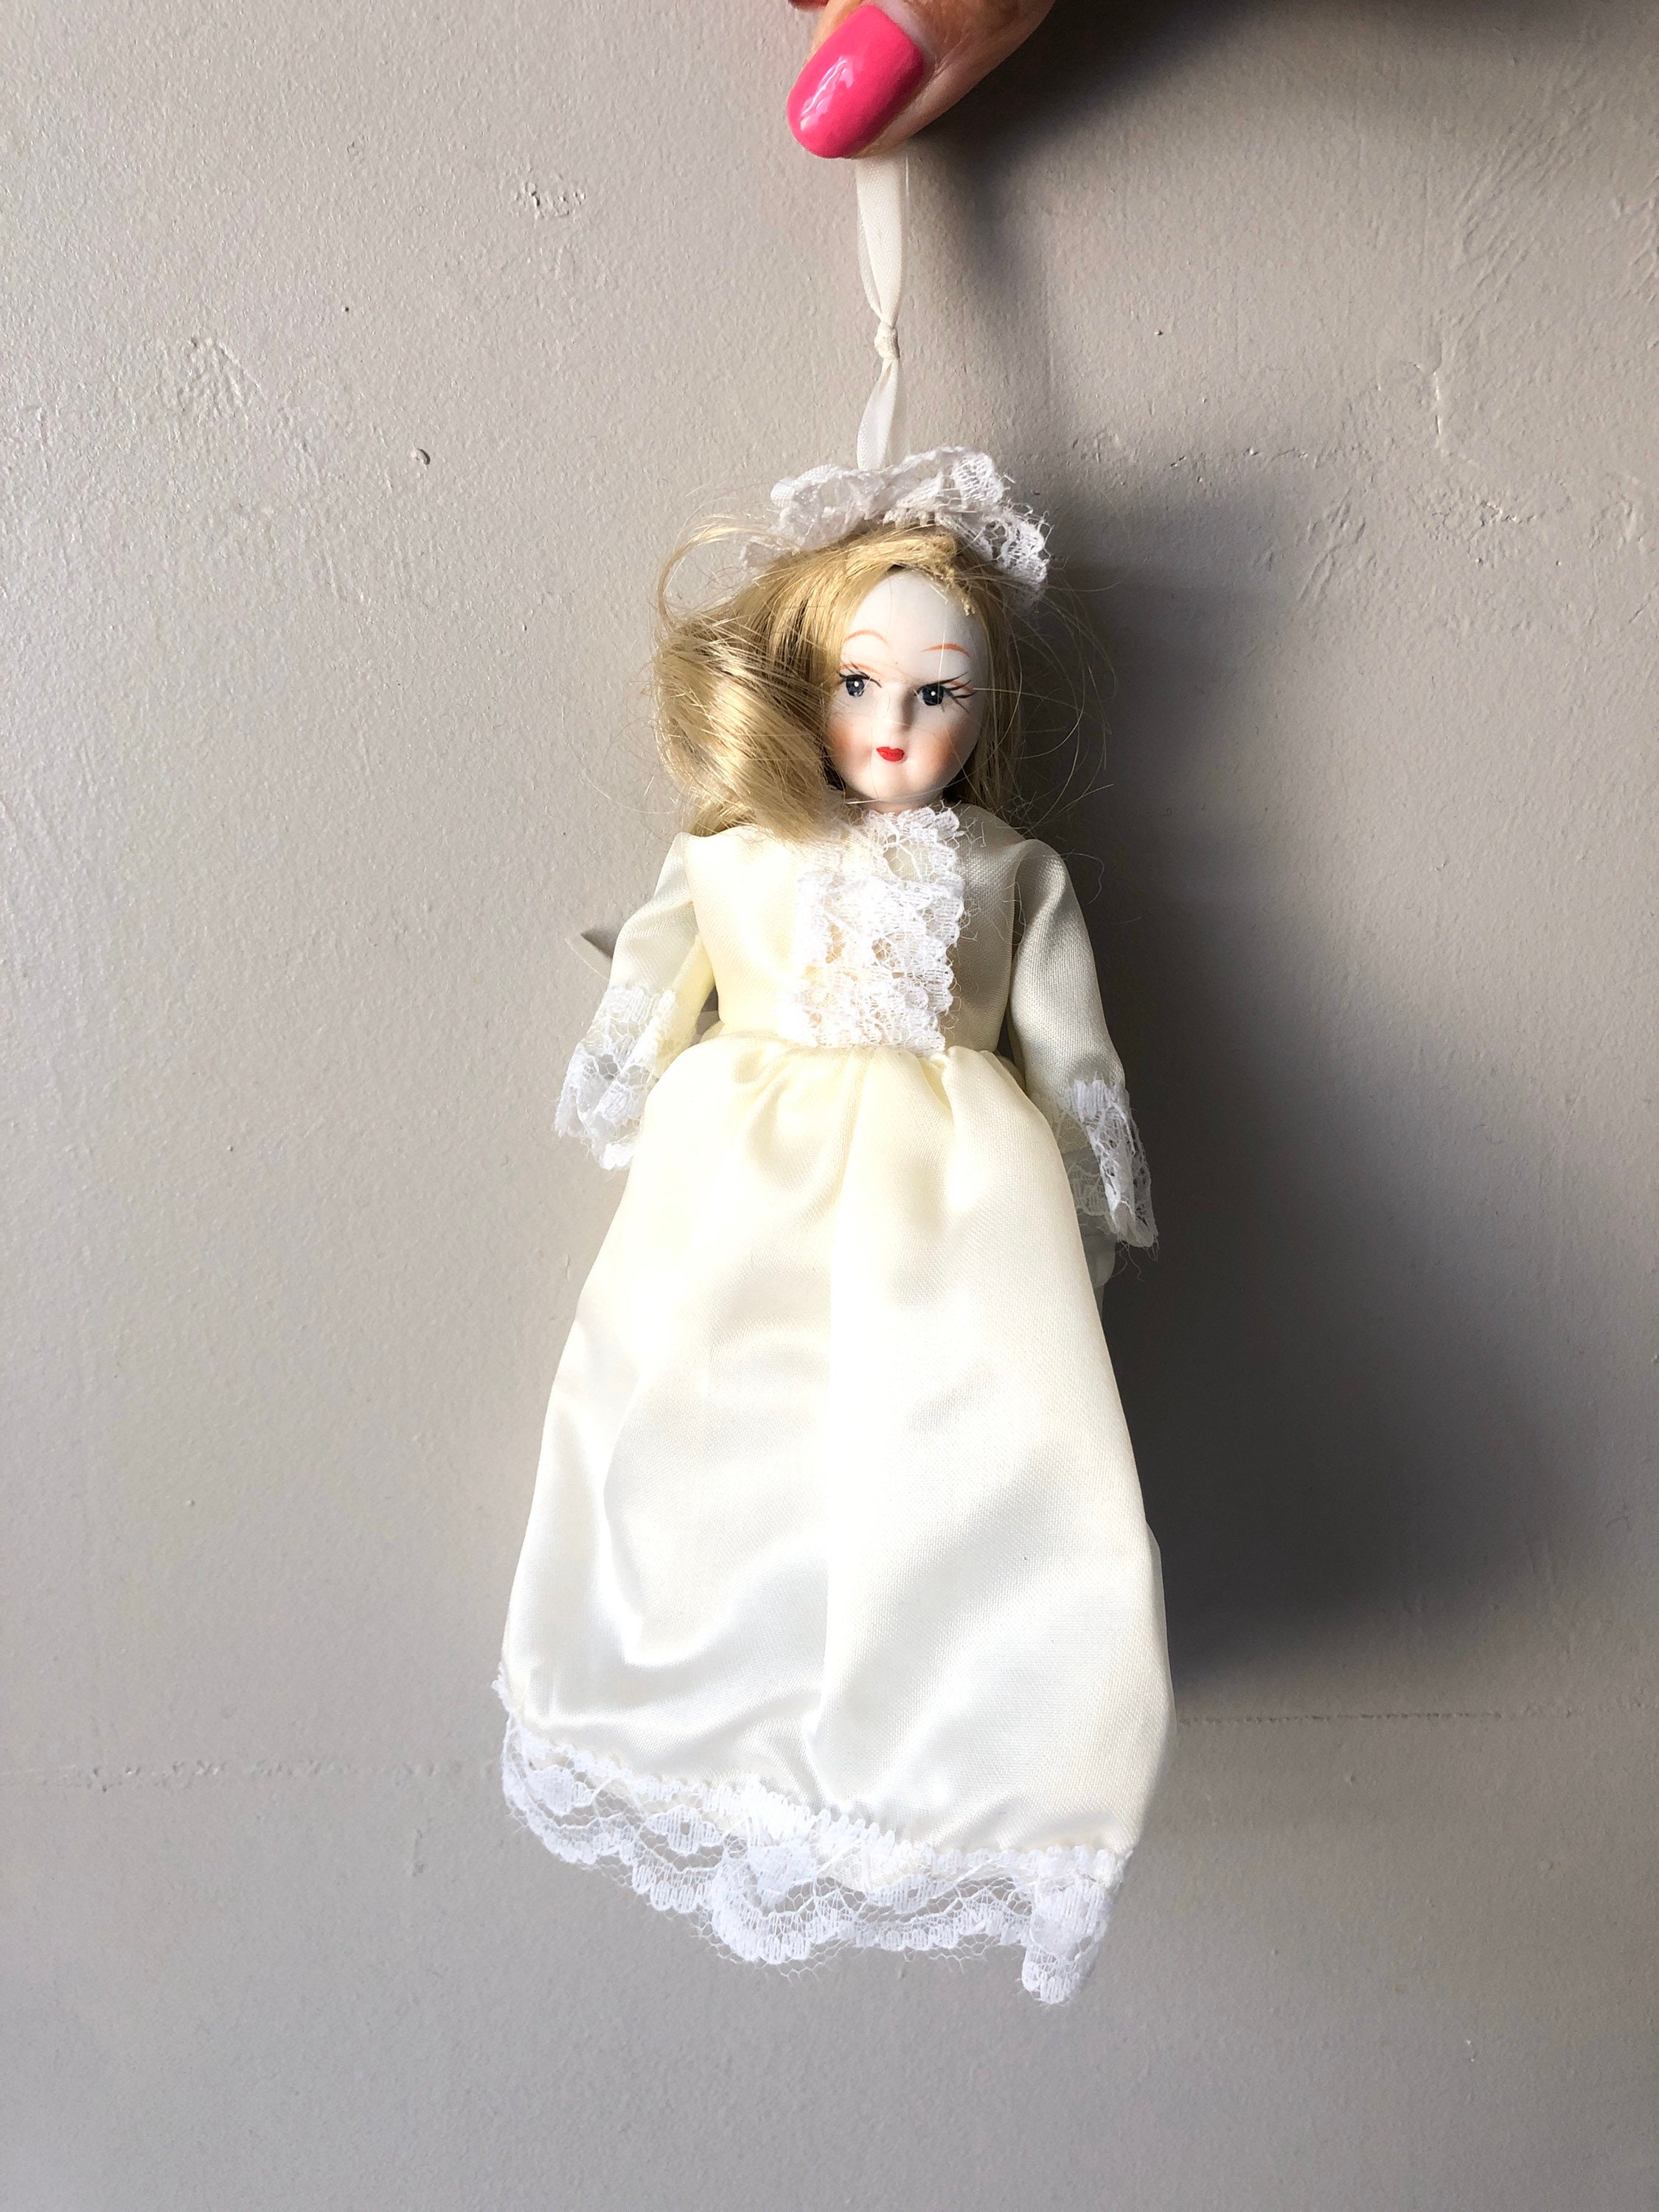 Porcelain Trim-A-Tree Victorian Doll in Beige dress | Etsy